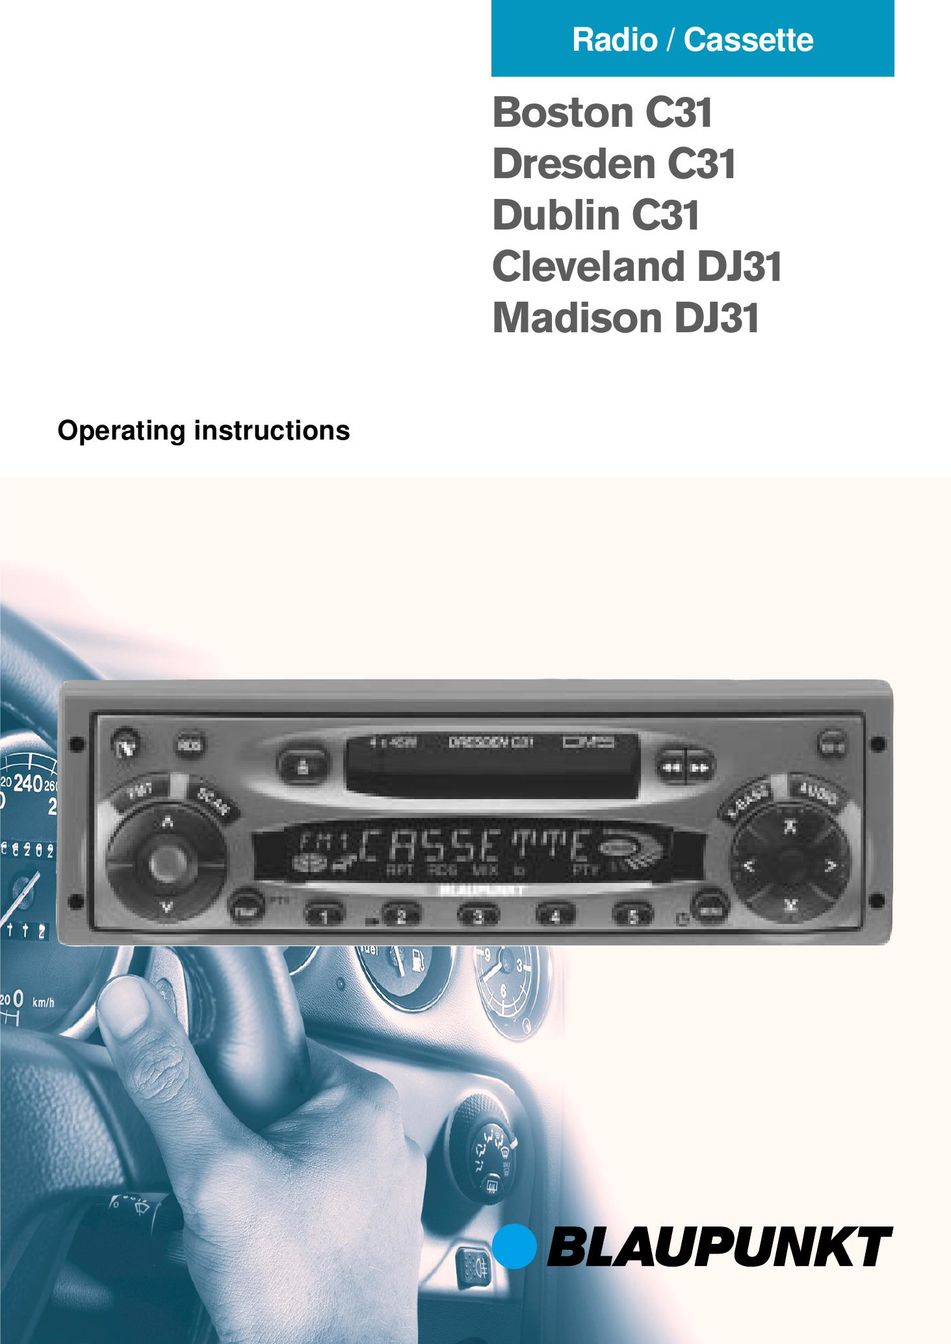 Blaupunkt Cleveland DJ31 Portable Radio User Manual